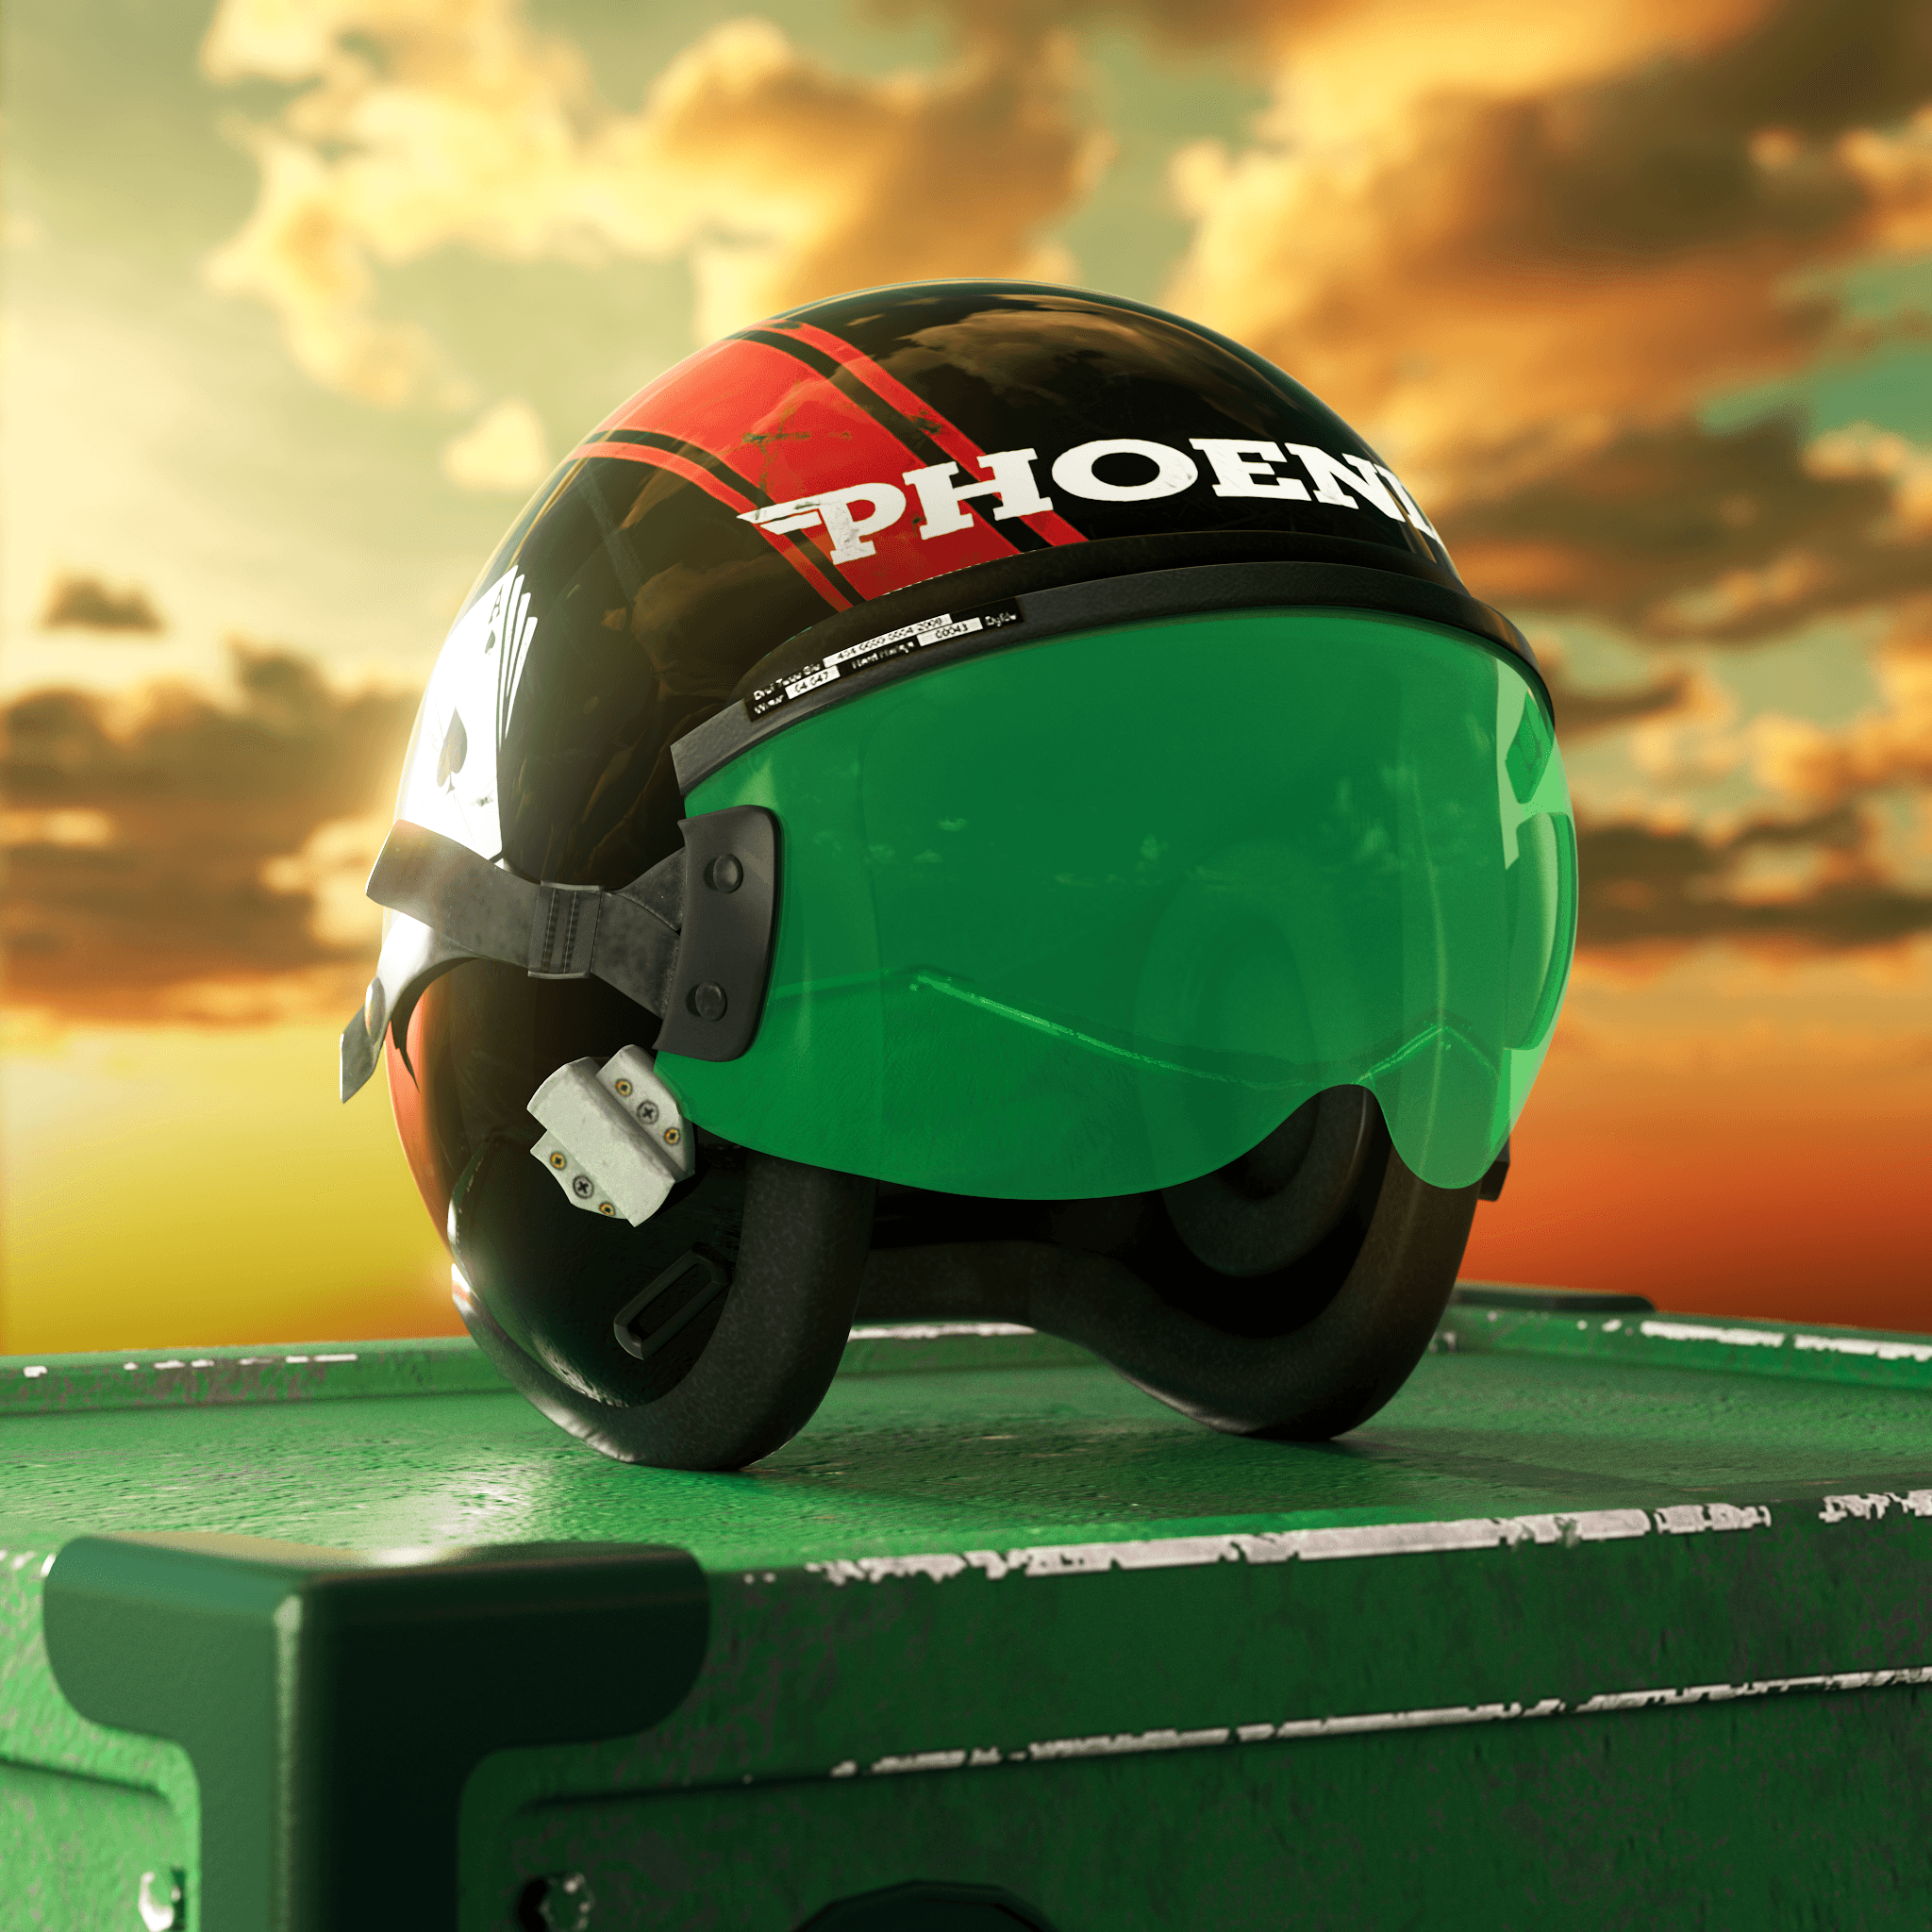 Phoenix's Helmet